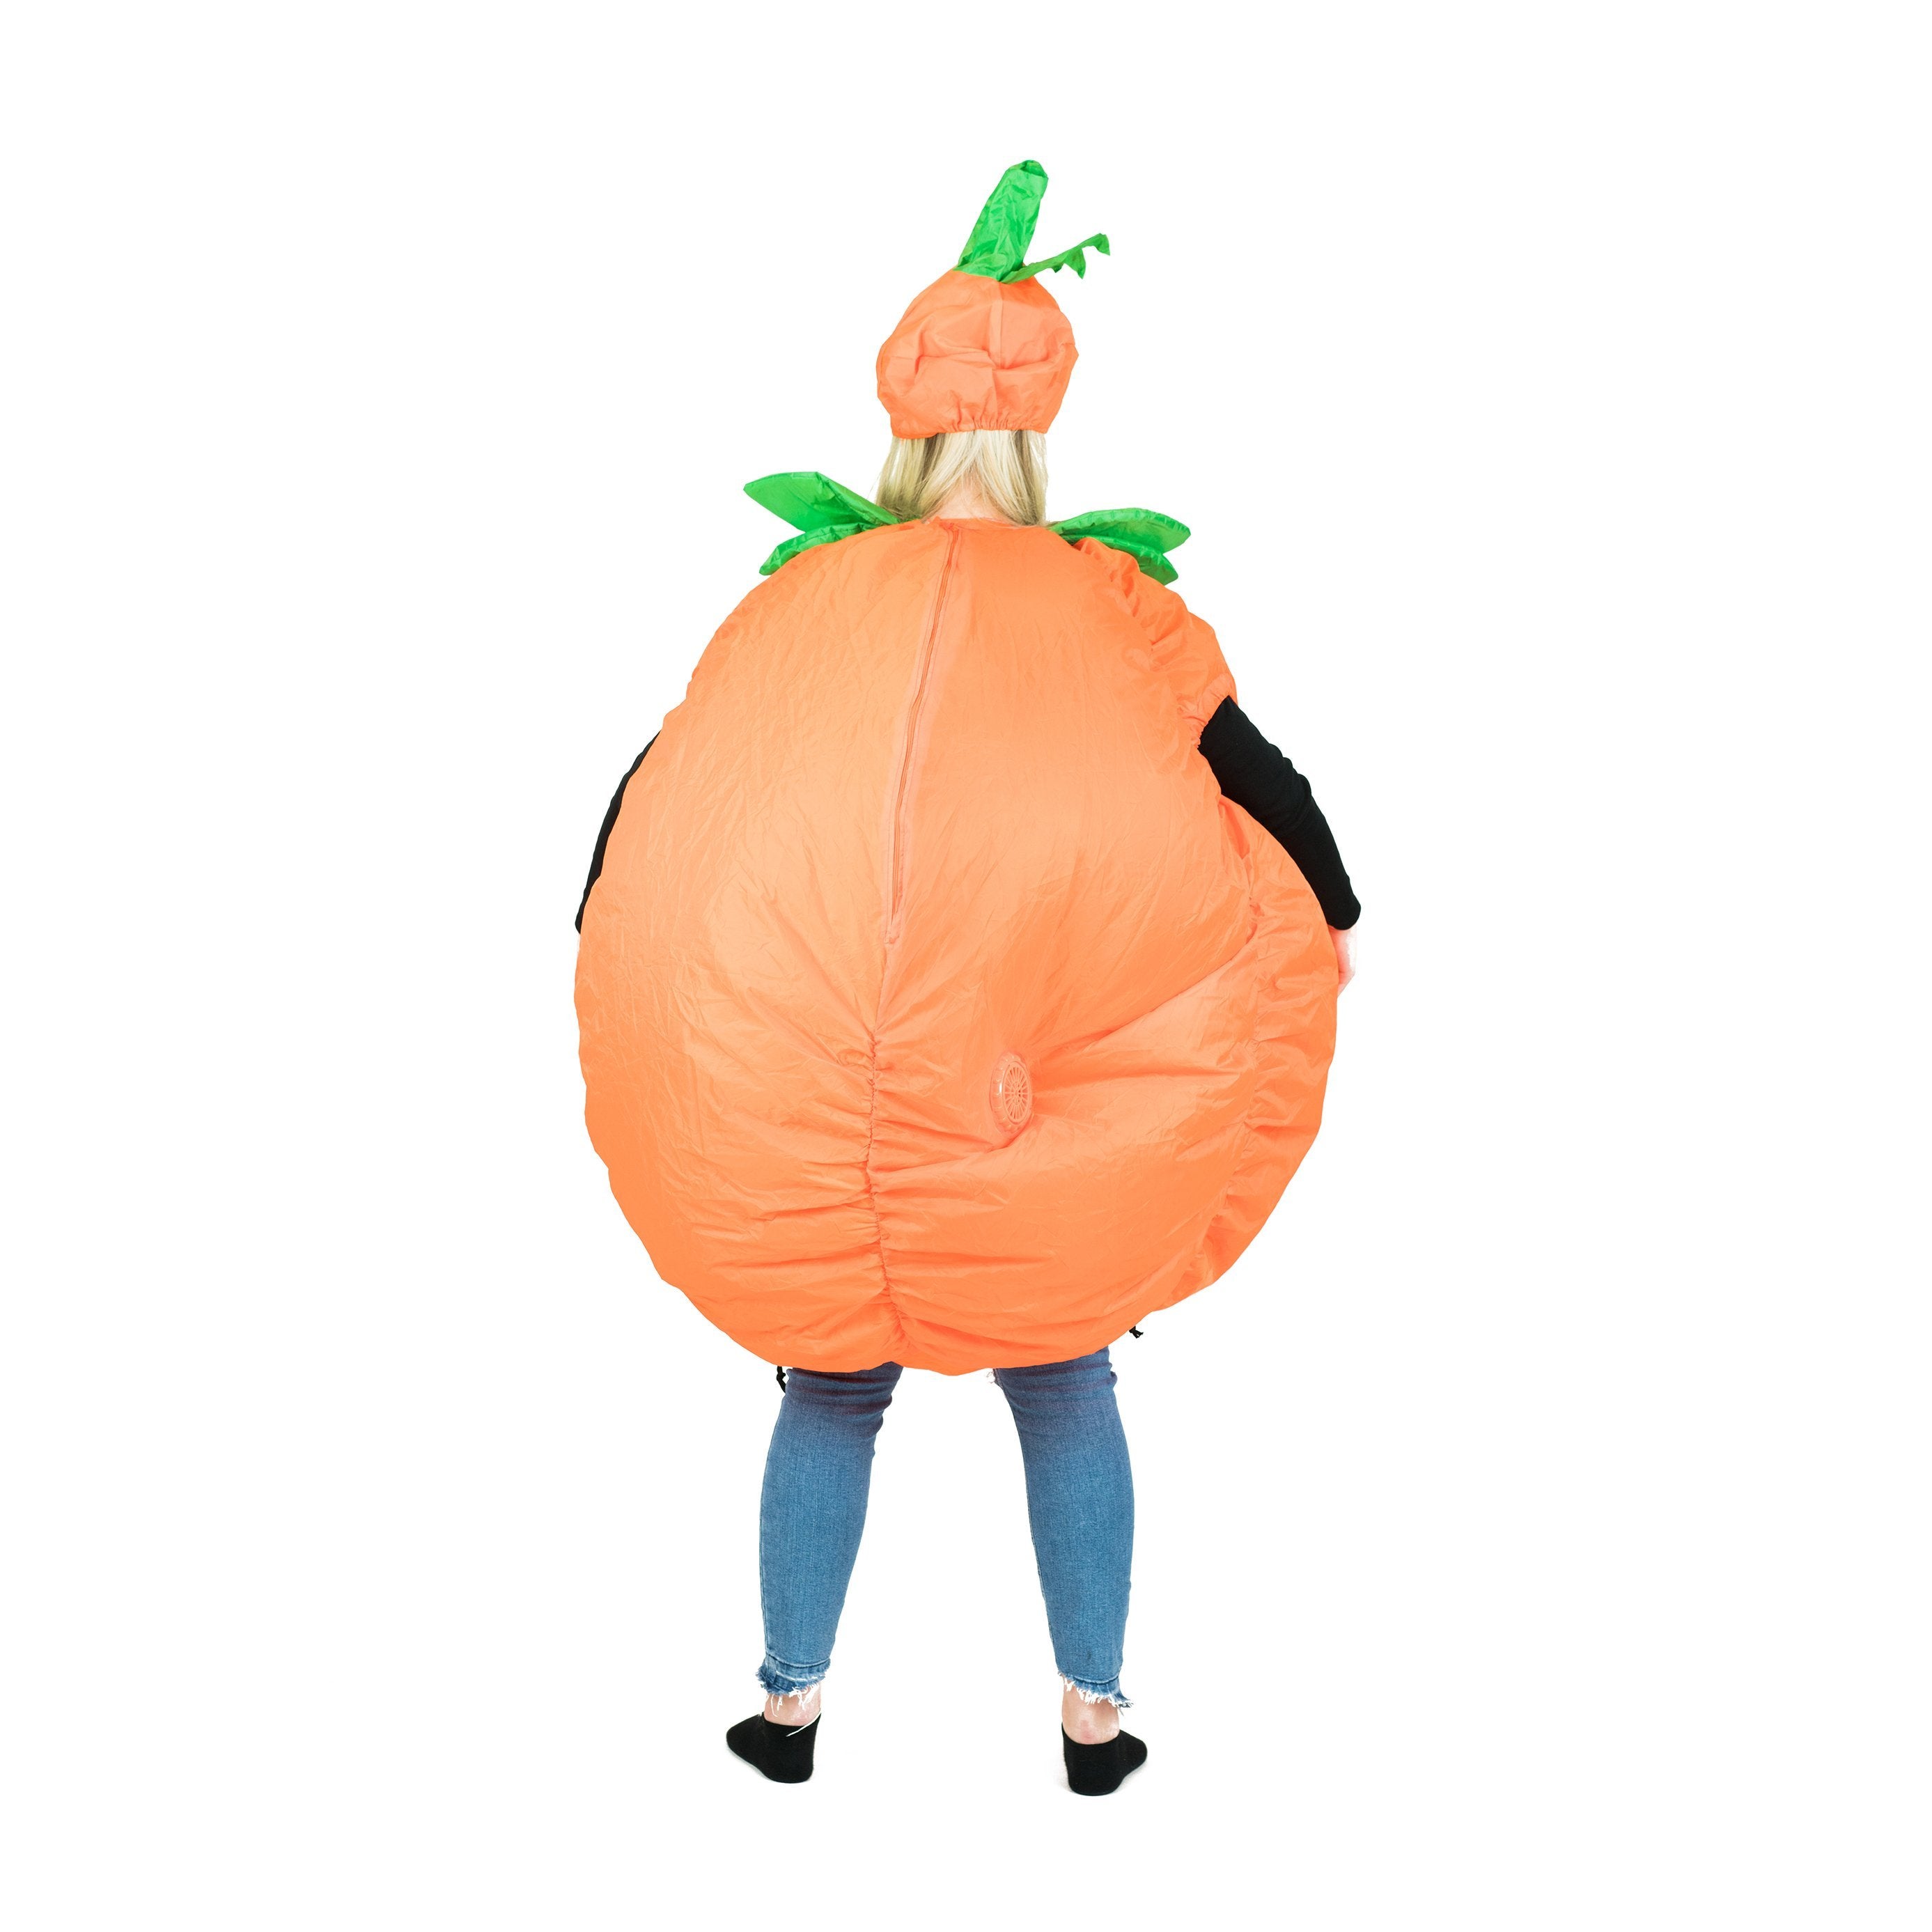 Bodysocks - Inflatable Pumpkin Costume